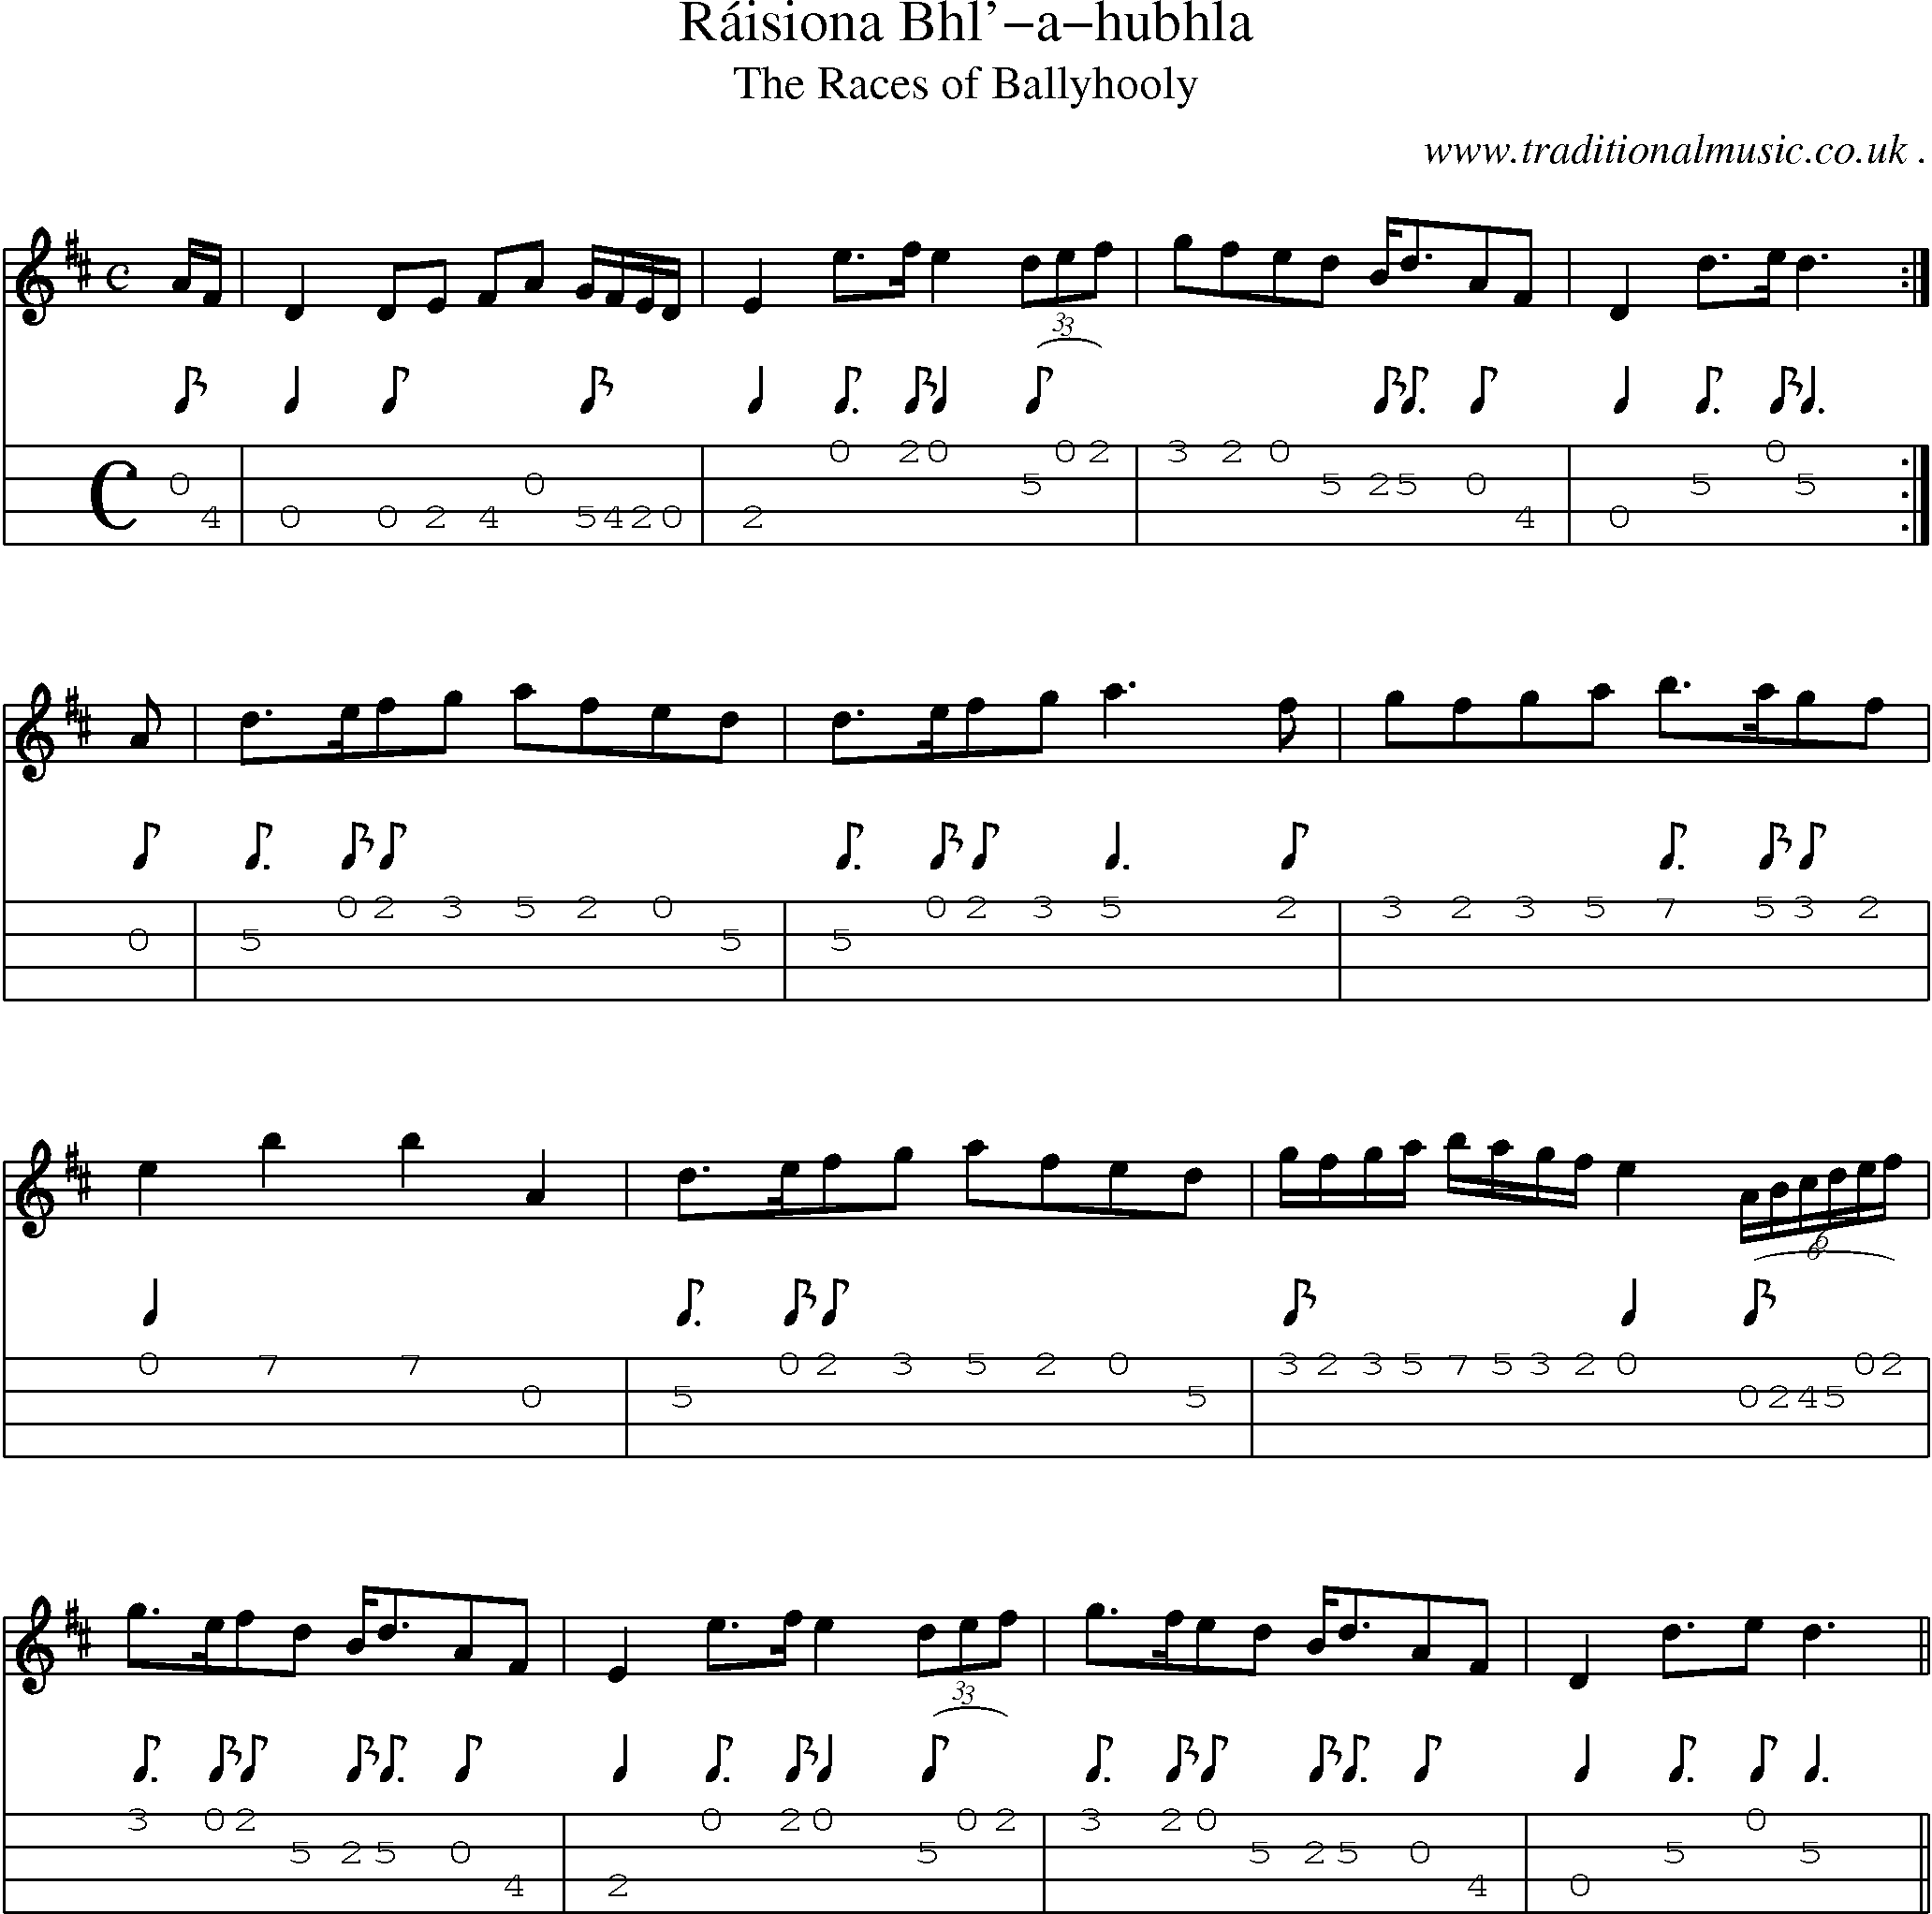 Sheet-Music and Mandolin Tabs for Raisiona Bhl-a-hubhla